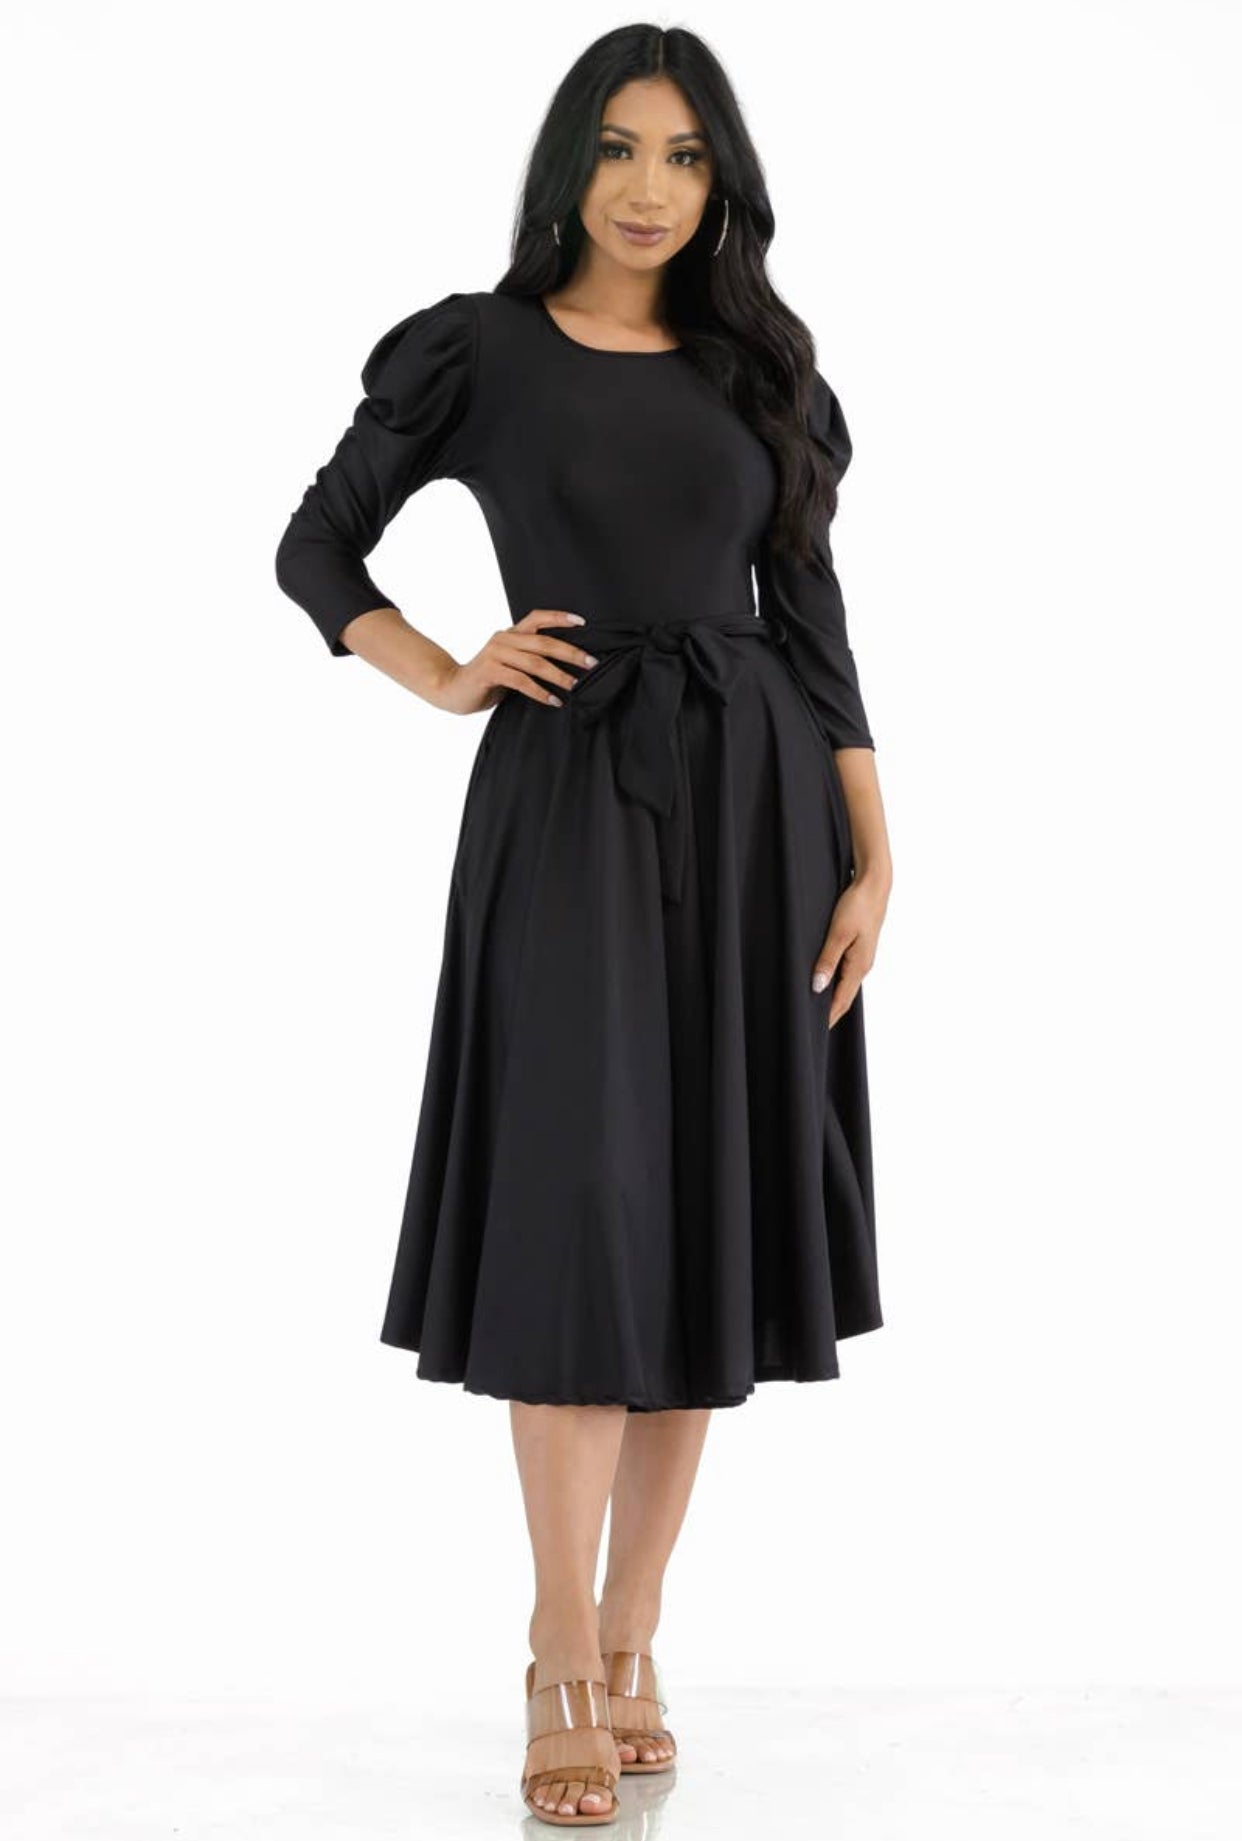 Puff Sleeve Cocktail Dress, Sizes 1X - 3X (Black)